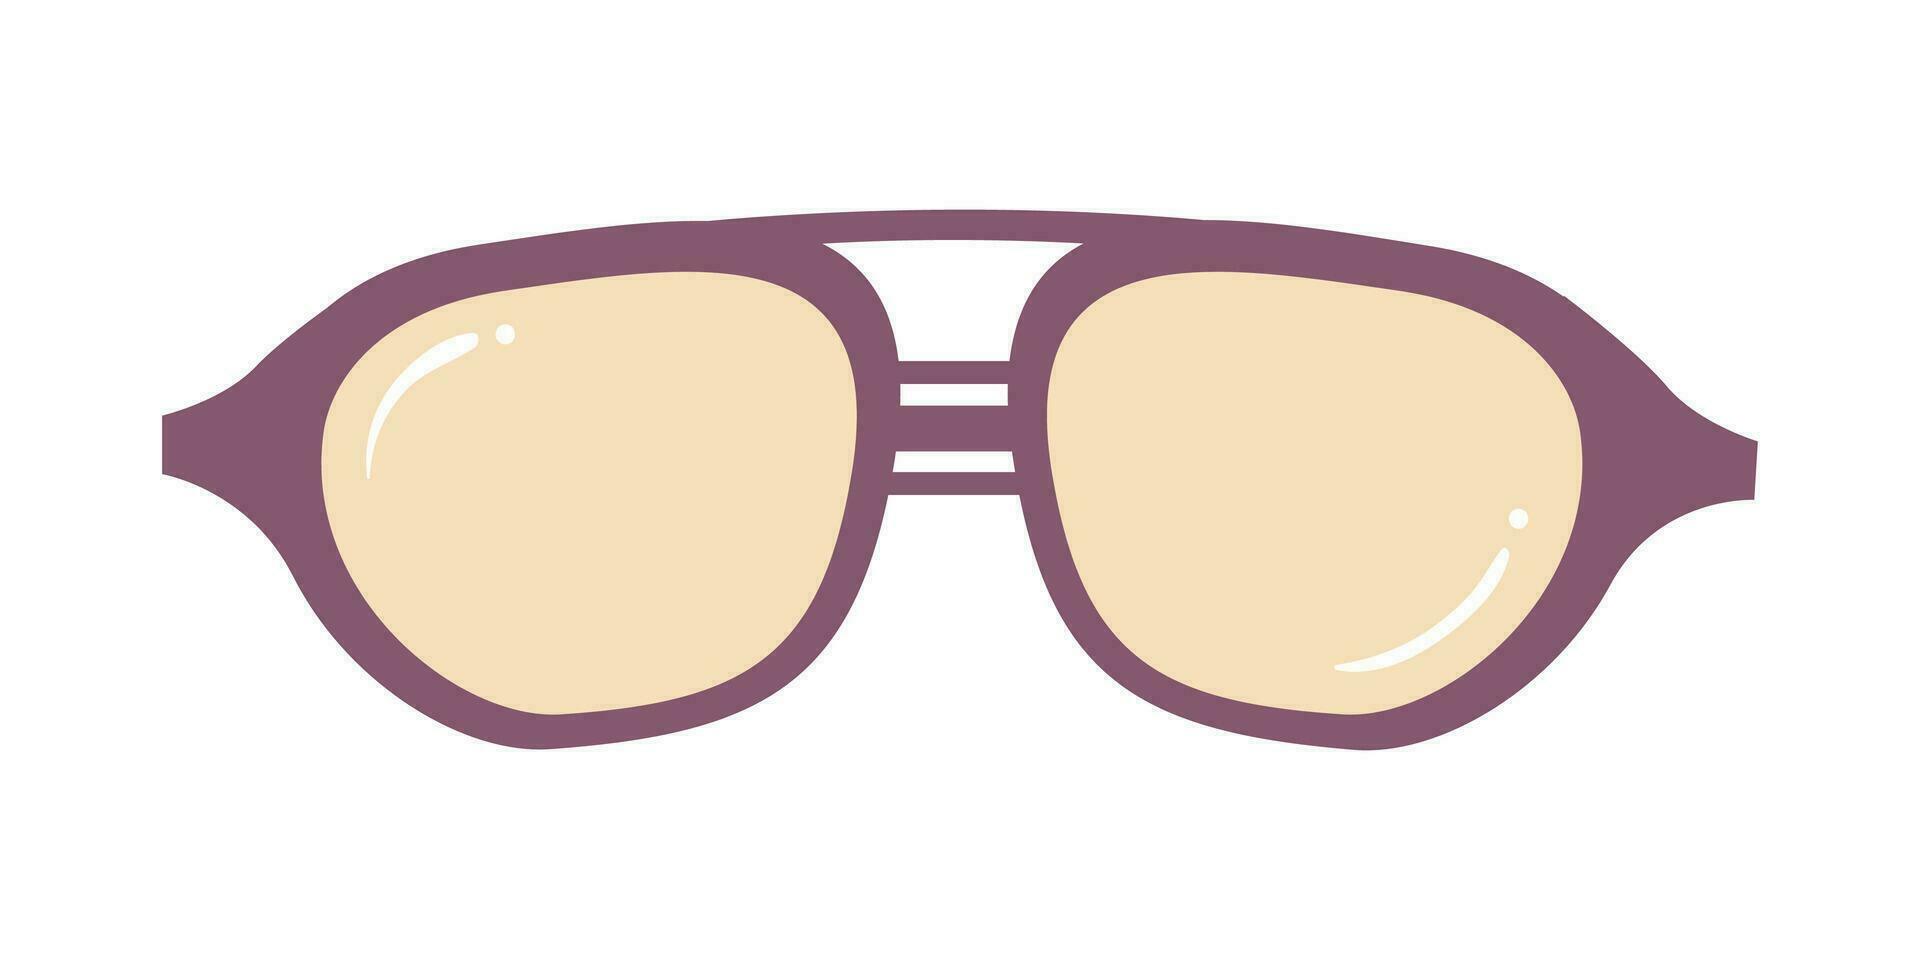 Sunglasses, glasses icon. Vector illustration, flat design. Funny summer glasses illustration.